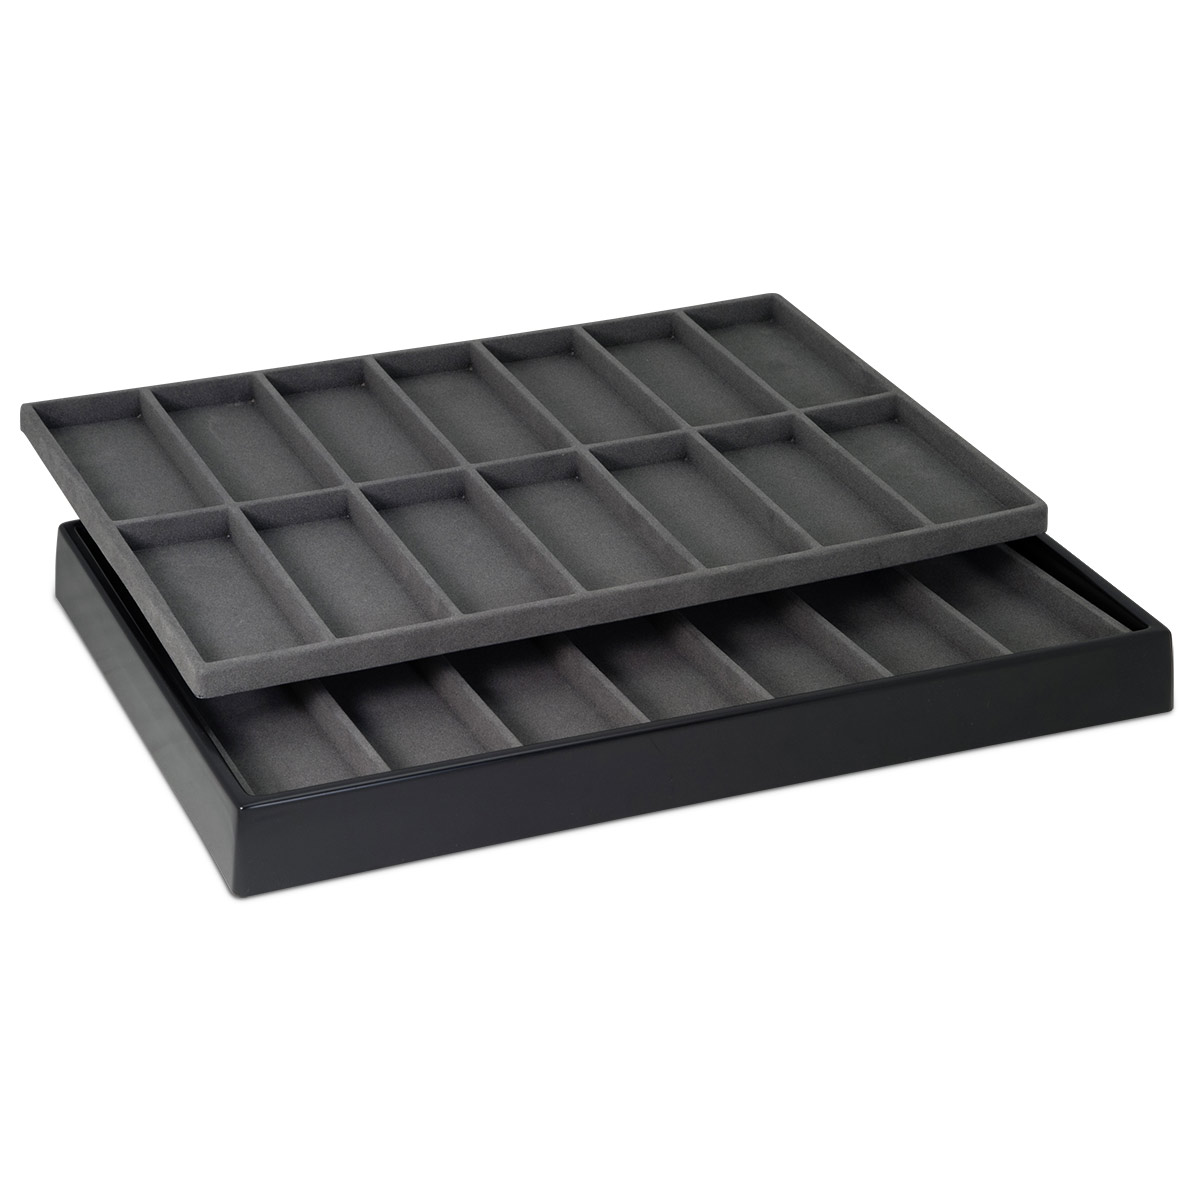 Large tray, plastic, black, 461 x 320 x 40 mm